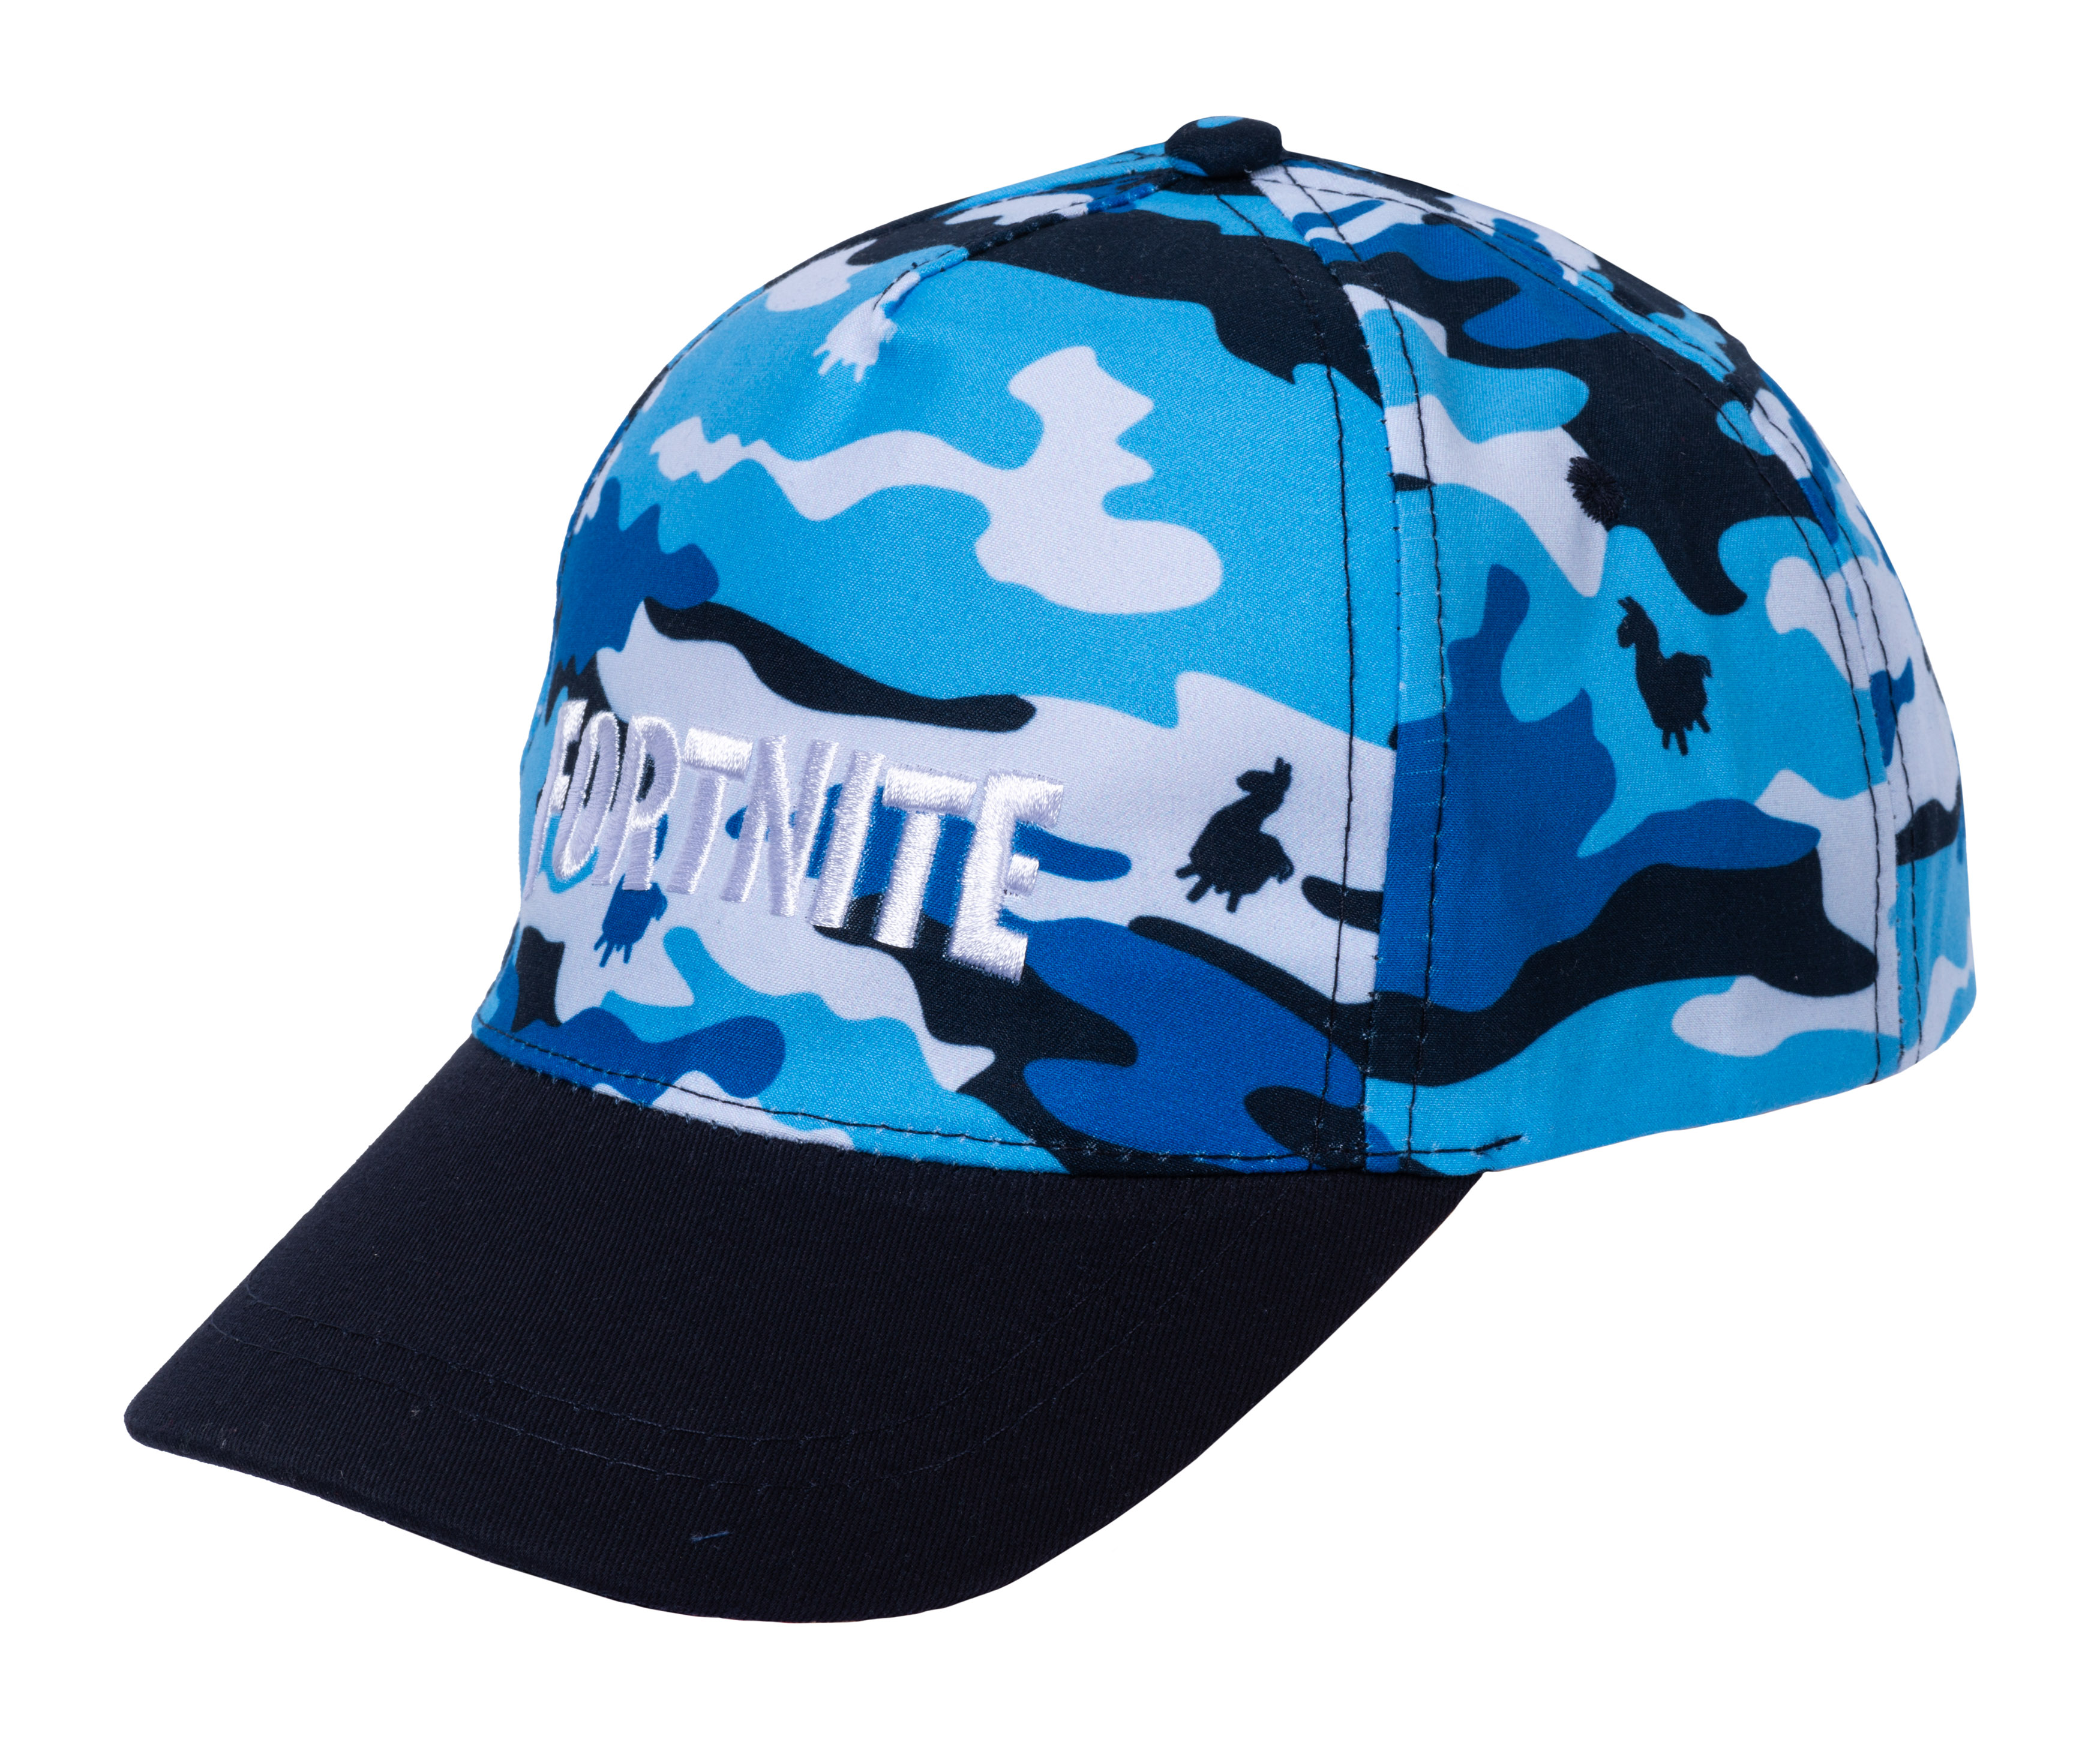 Kappe - Fortnite - camouflage blau